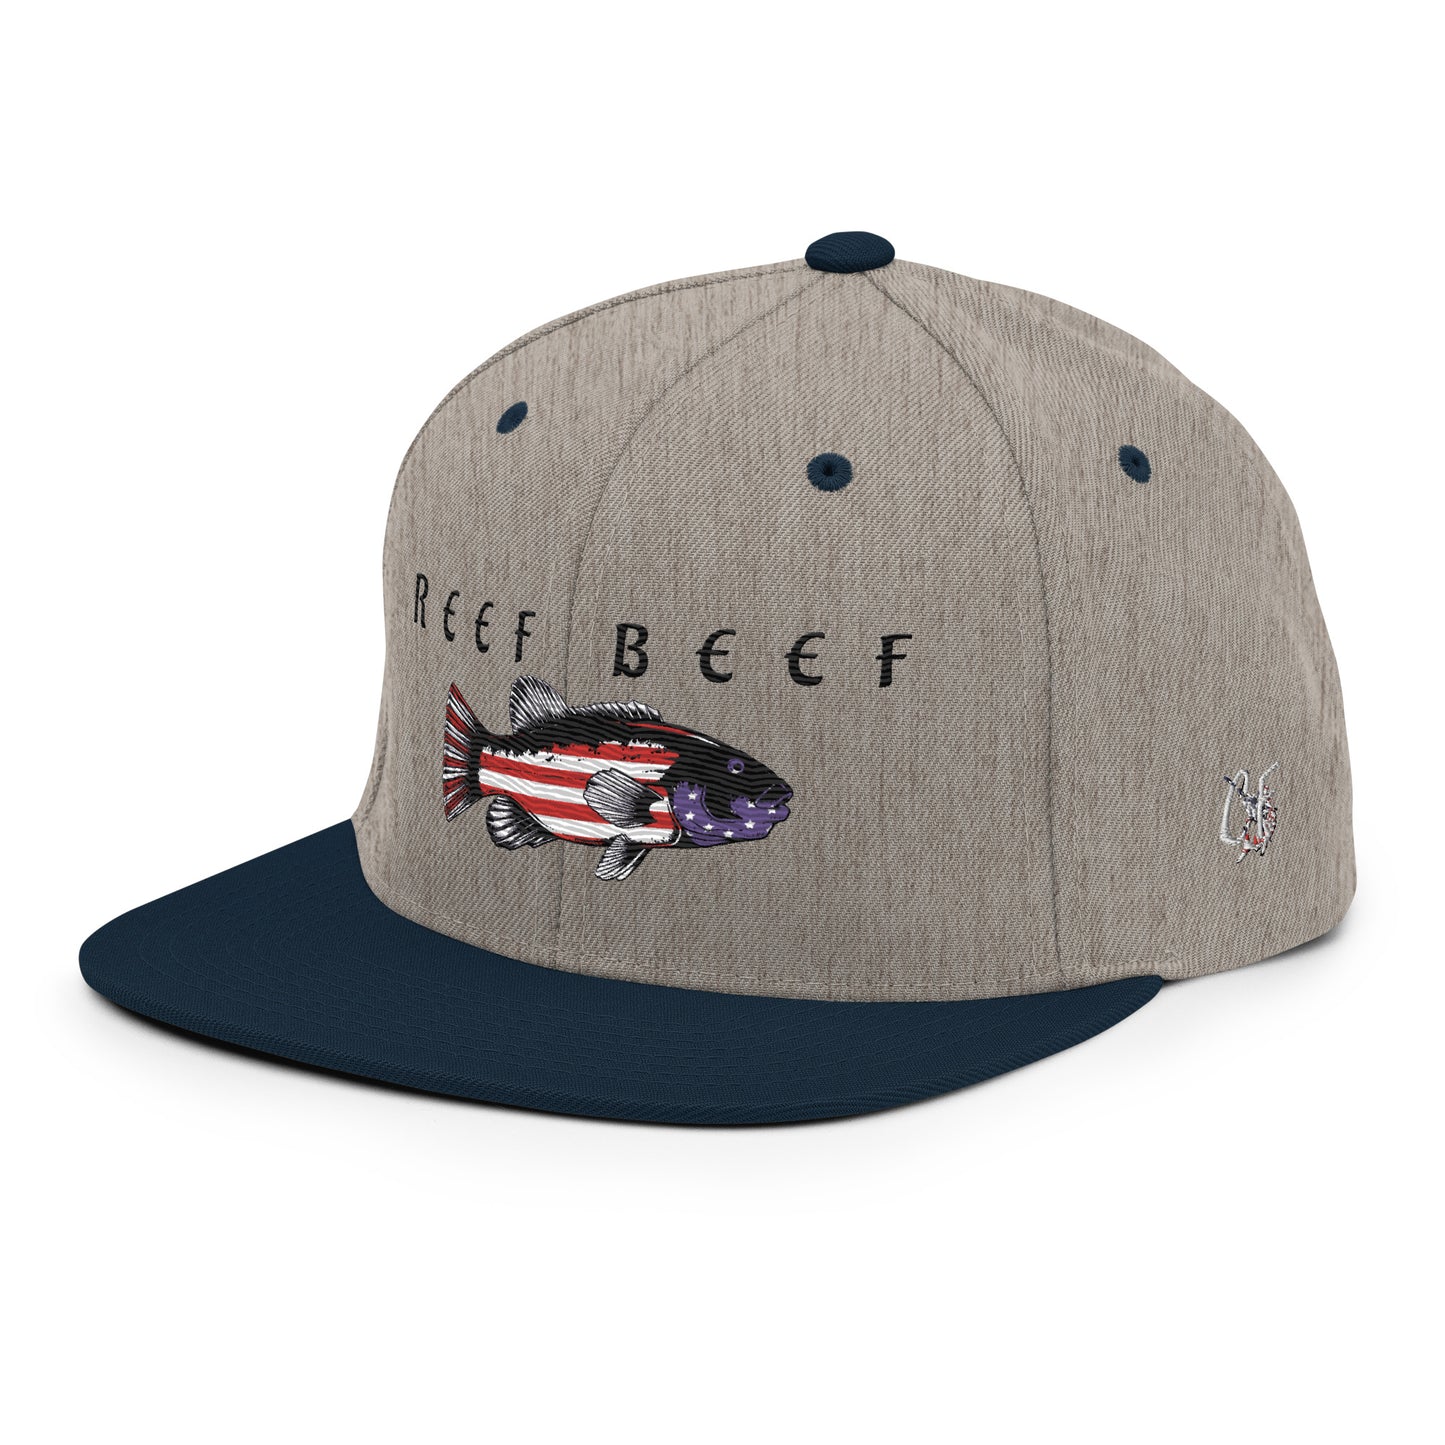 'Reef Beef' American Blackfish Mashup (Dark) Snapback Hat